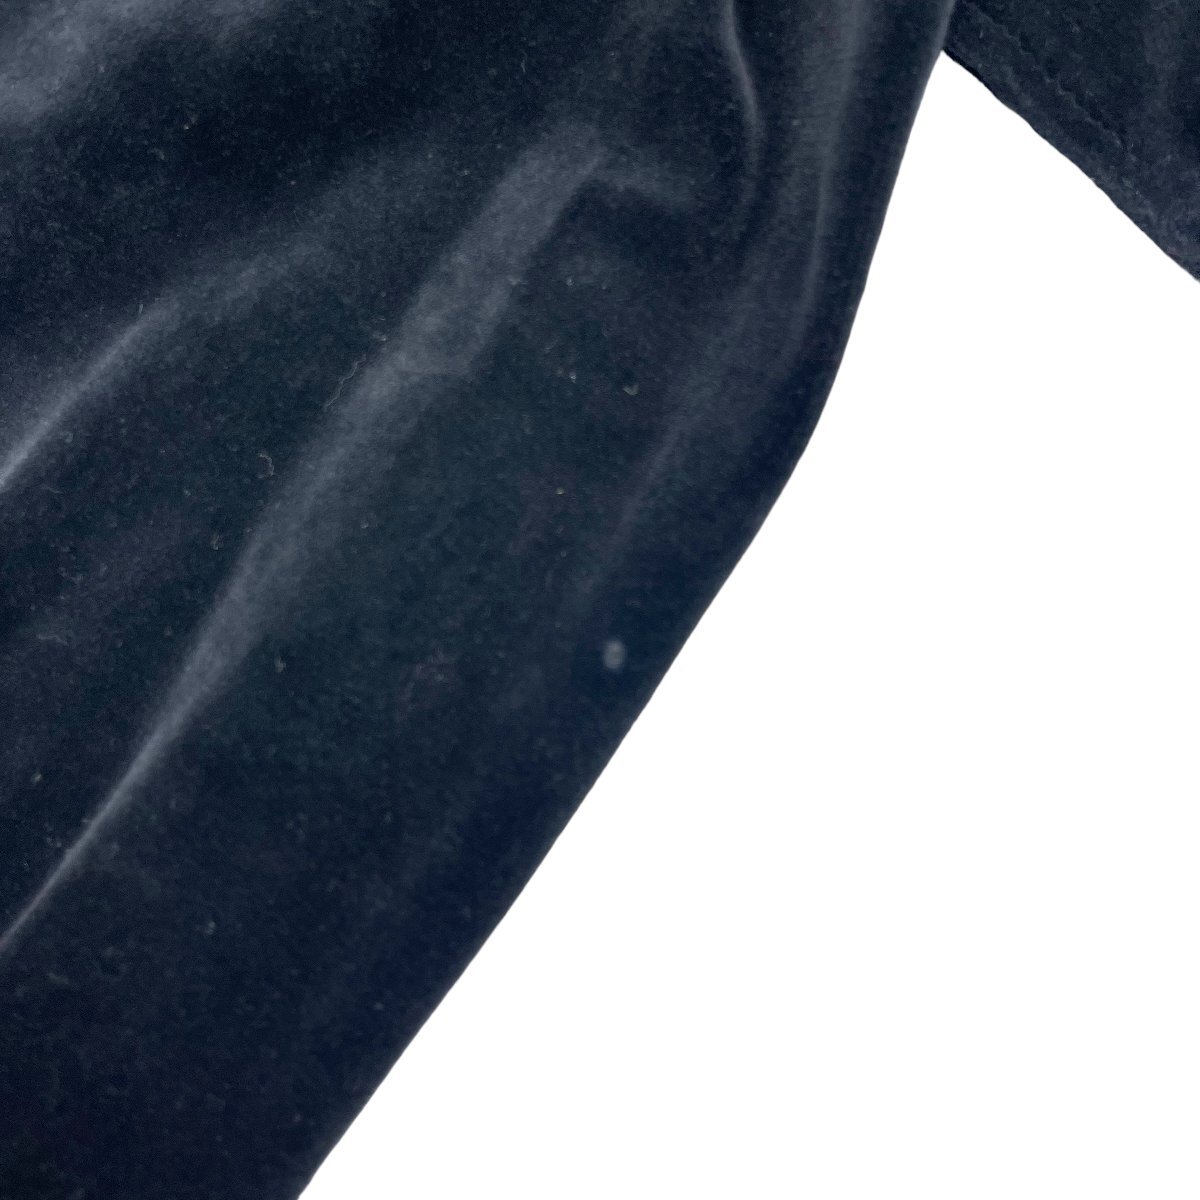 A937#EMPORIO ARMANI Emporio Armani # рубашка с длинным рукавом cut and sewn # черный 46 размер 